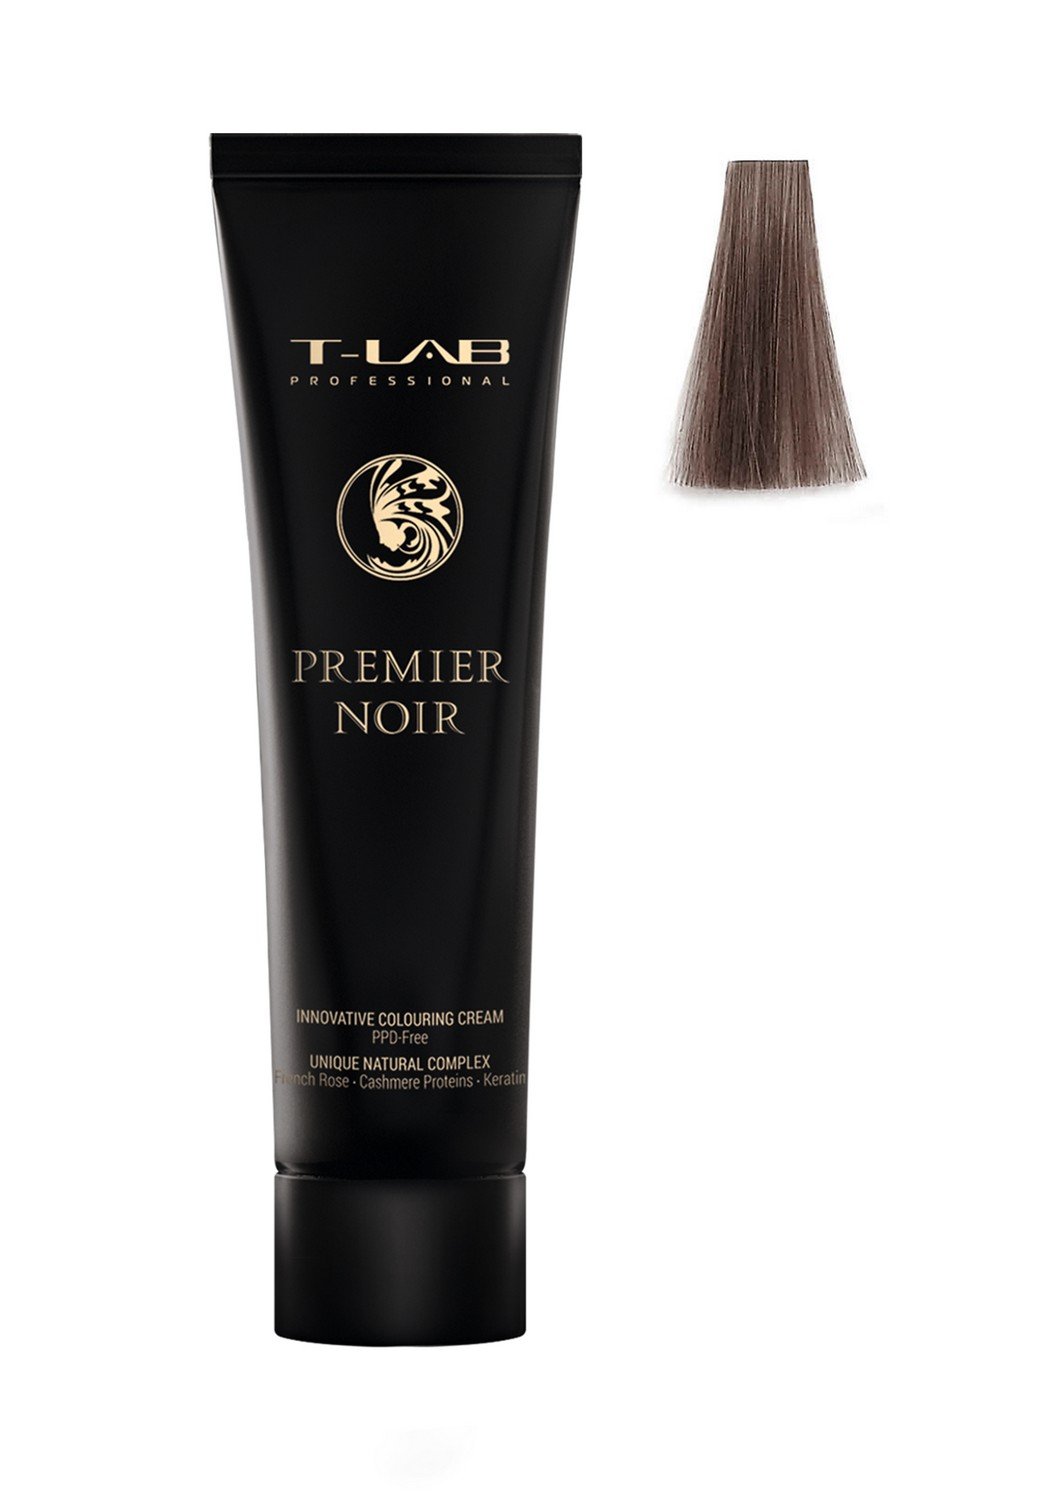 Крем-фарба T-LAB Professional Premier Noir colouring cream, відтінок 9.22 (very light natural iridescent blonde) - фото 2